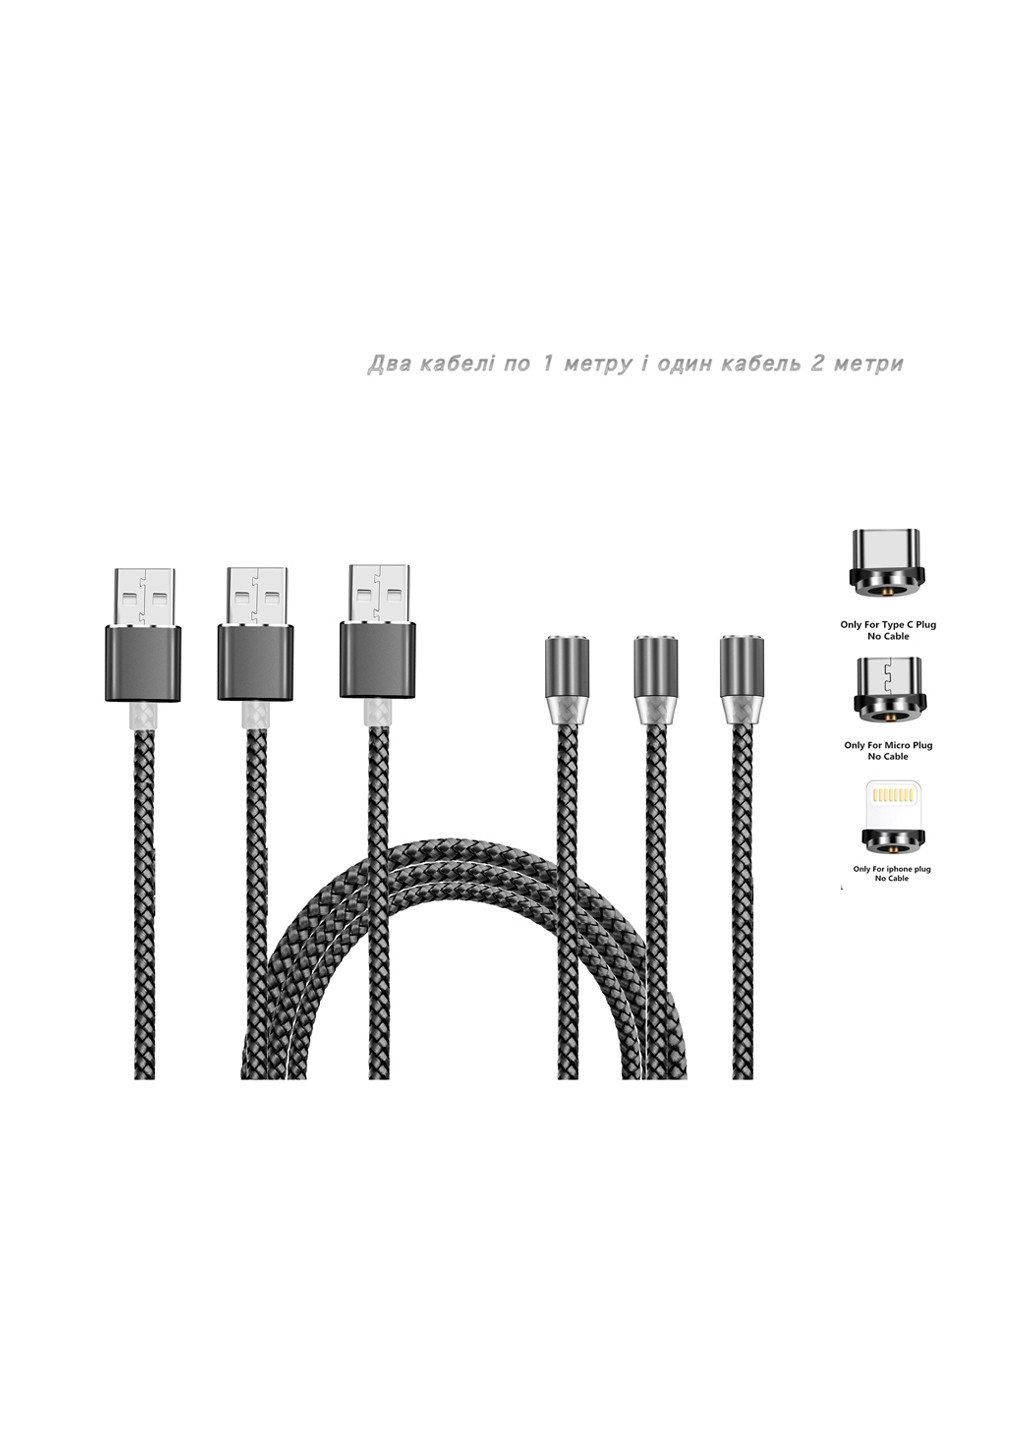 Набір магнітних кабелів USB SC-300 Magneto Grey - 3 в 1, 2х1 метр і 1х2 метра XoKo sc-300 набор магнитных кабелей usb (132572882)